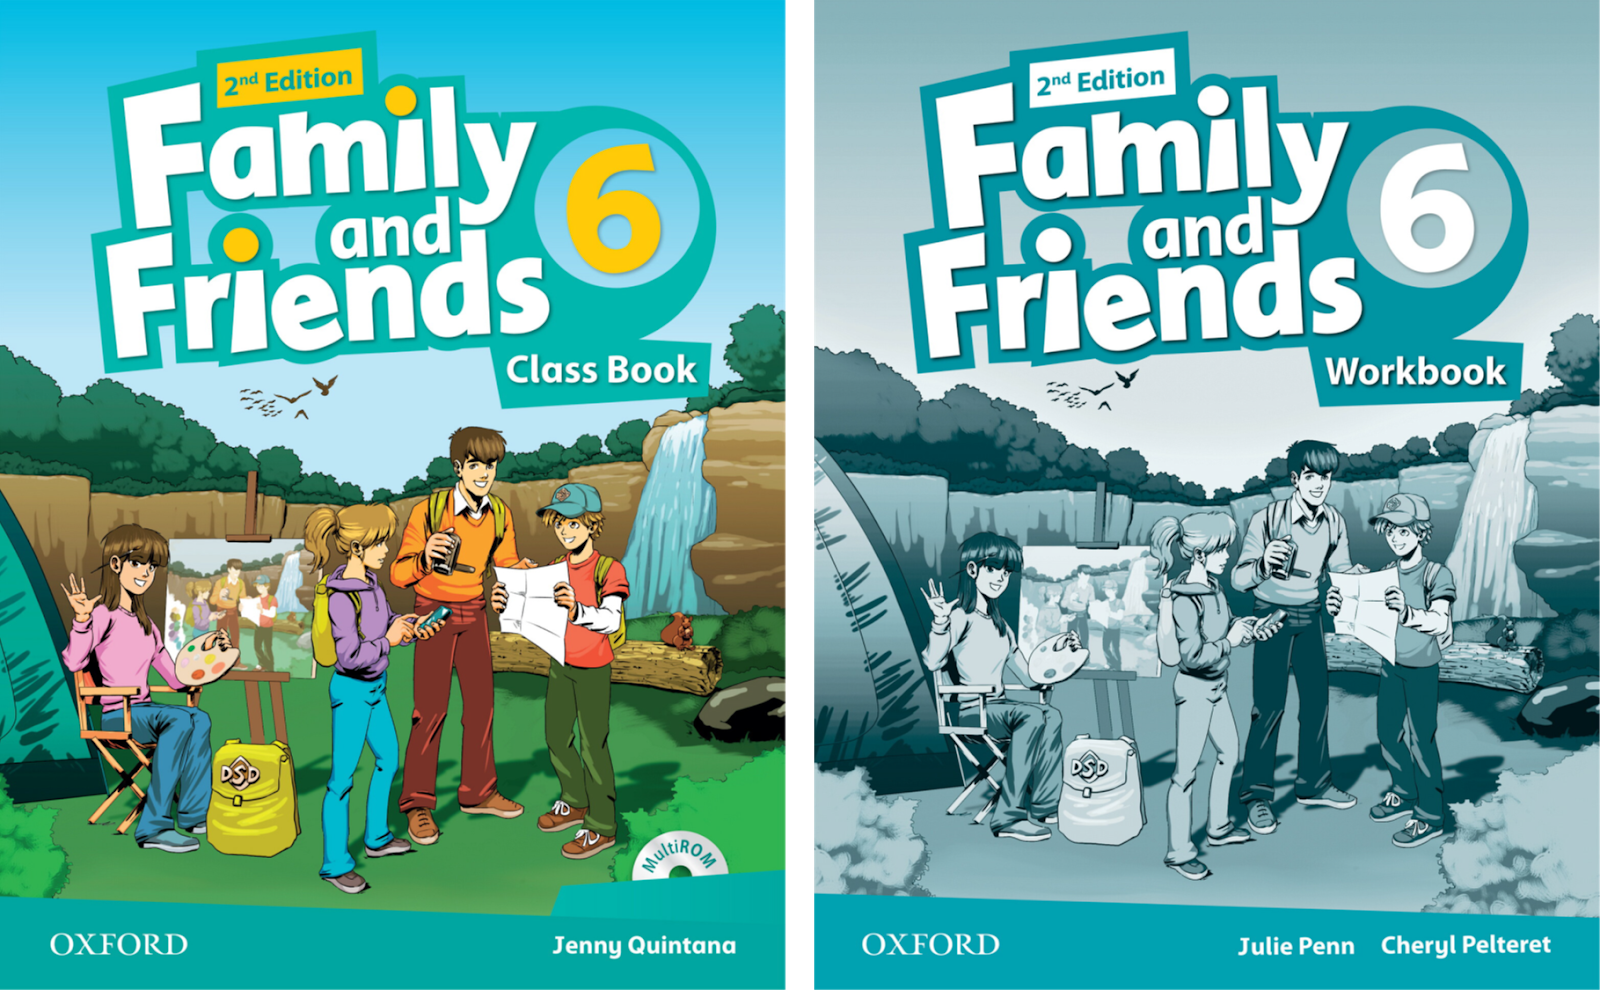 Family and friends 2 первое издание. Family and friends 2 2nd Edition Classbook. Family and friends (2nd Edition) 1 class book. \Фэмили энд френдс 2 издание.